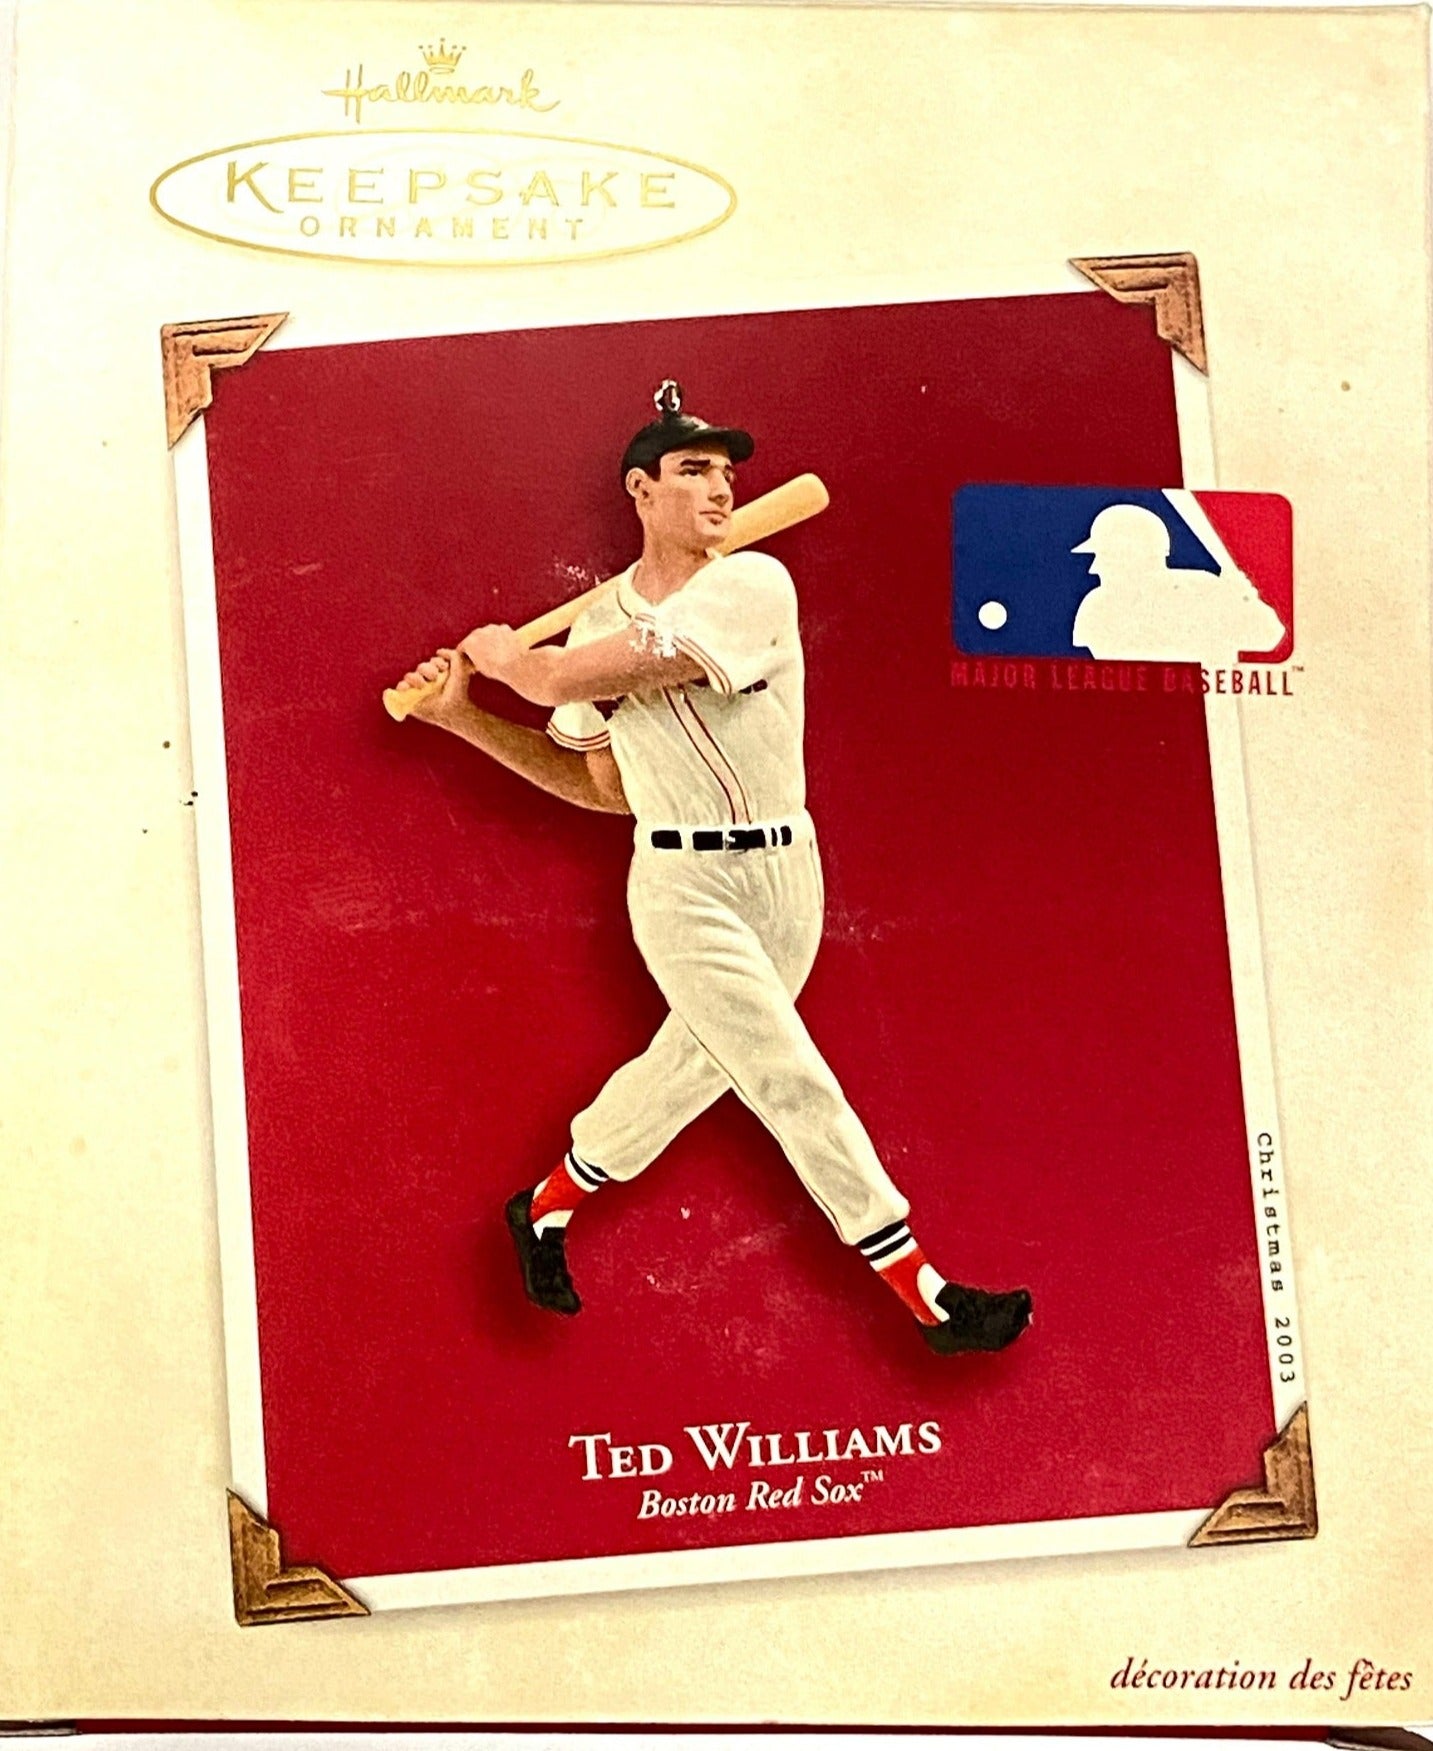 Ted Williams 2003 Boston Red Sox Keepsake Ornament Used by Hallmark